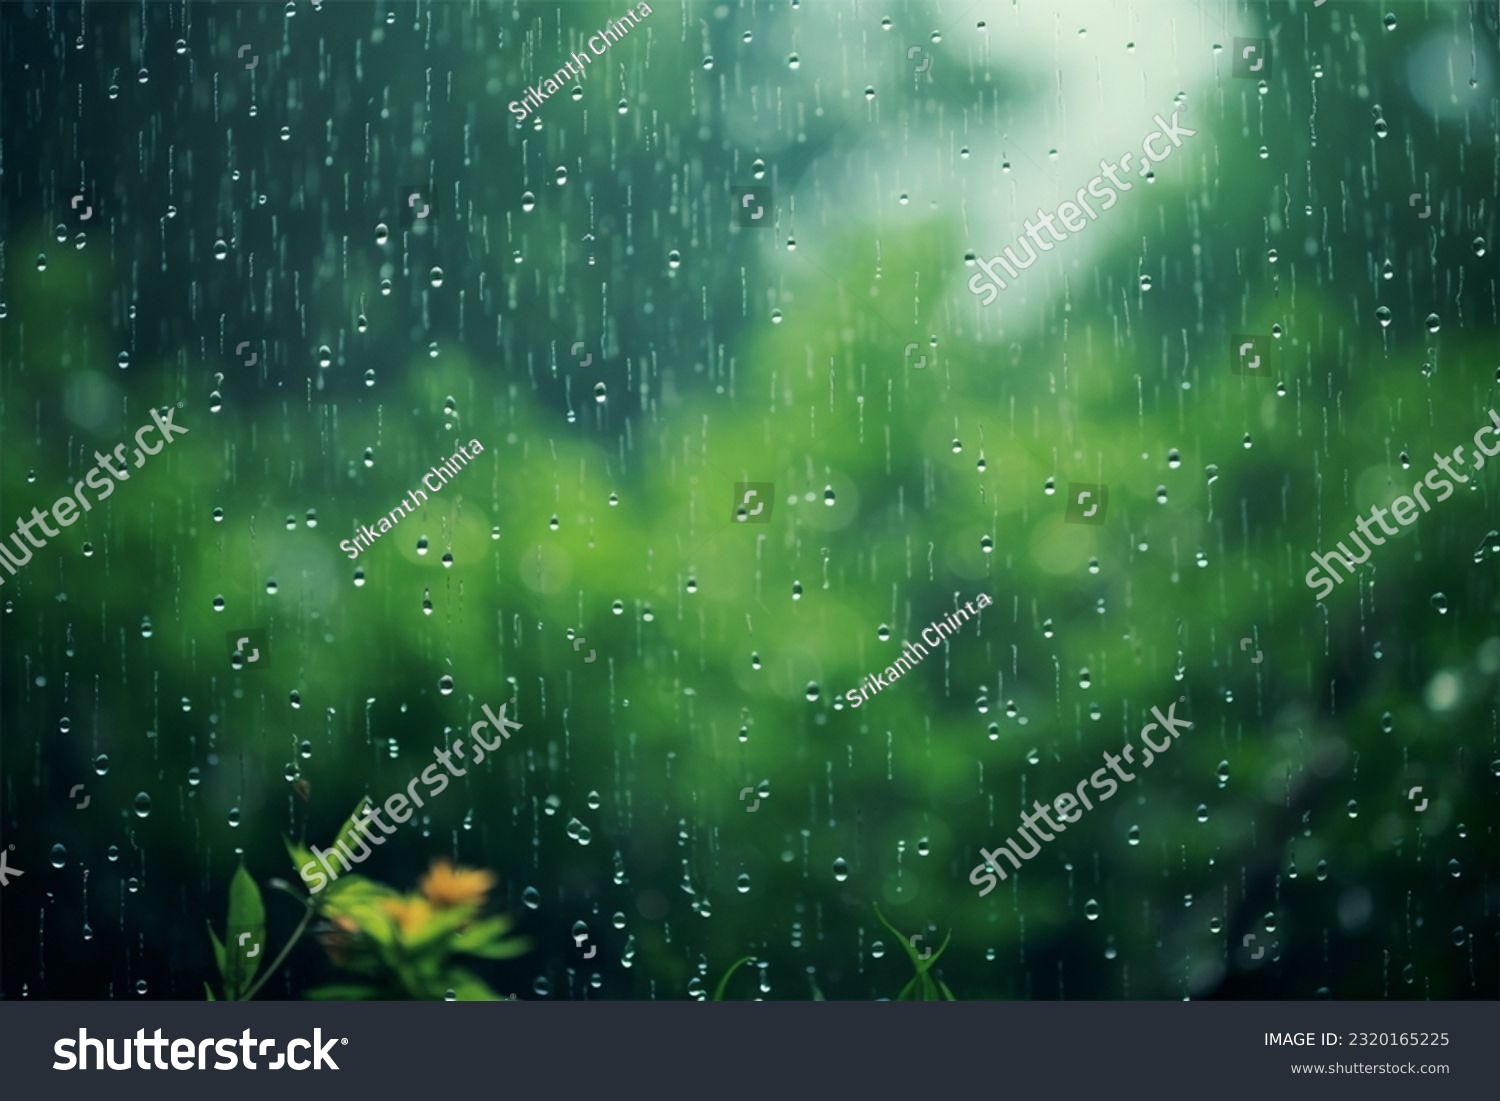 rain in nature background, monsoon #2320165225